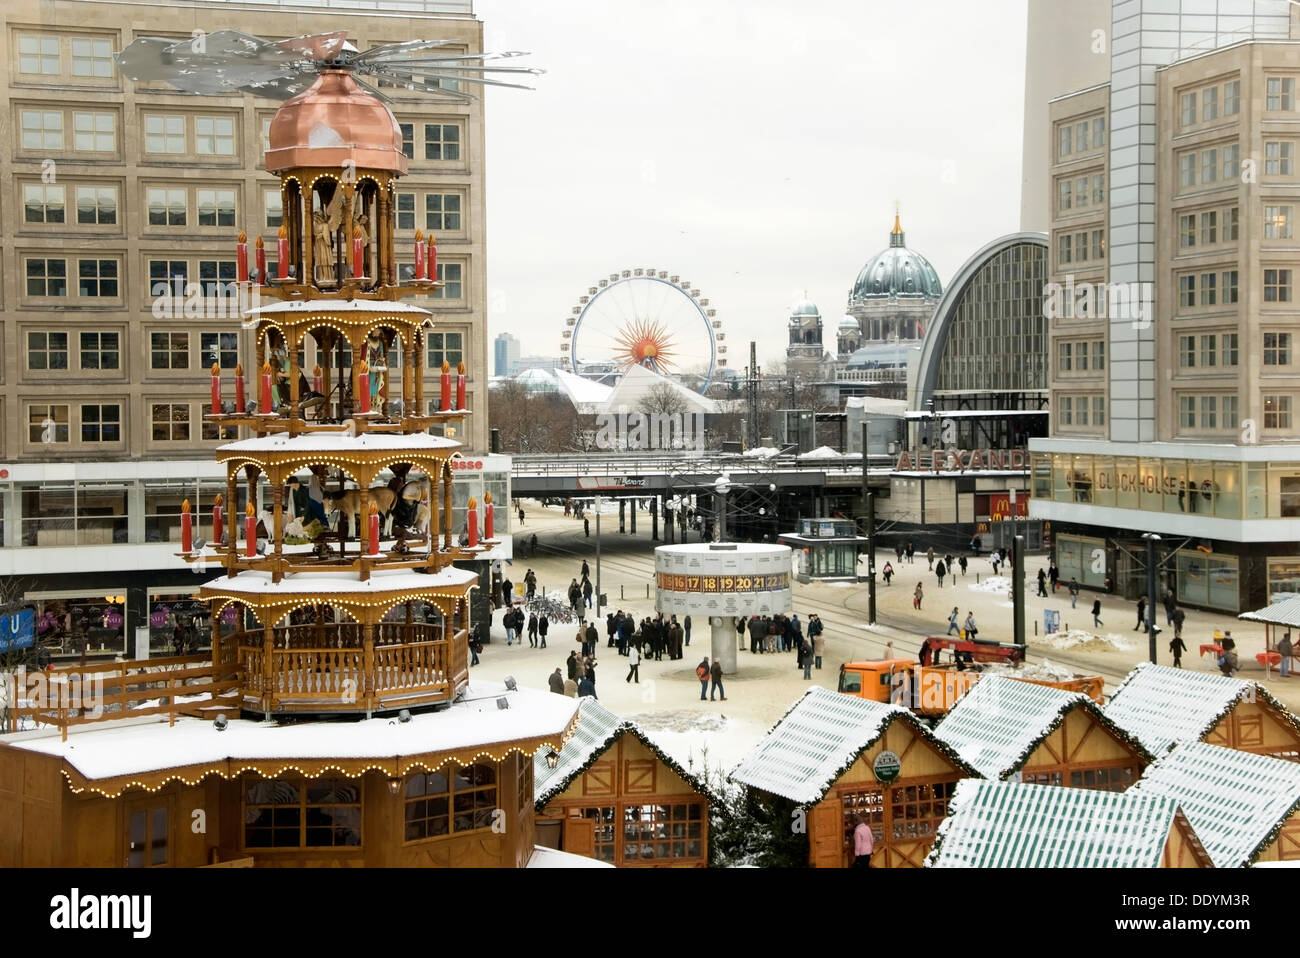 Christmas market with Christmas pyramid from the Erzgebirge region, Alexanderplatz square, Berlin Stock Photo